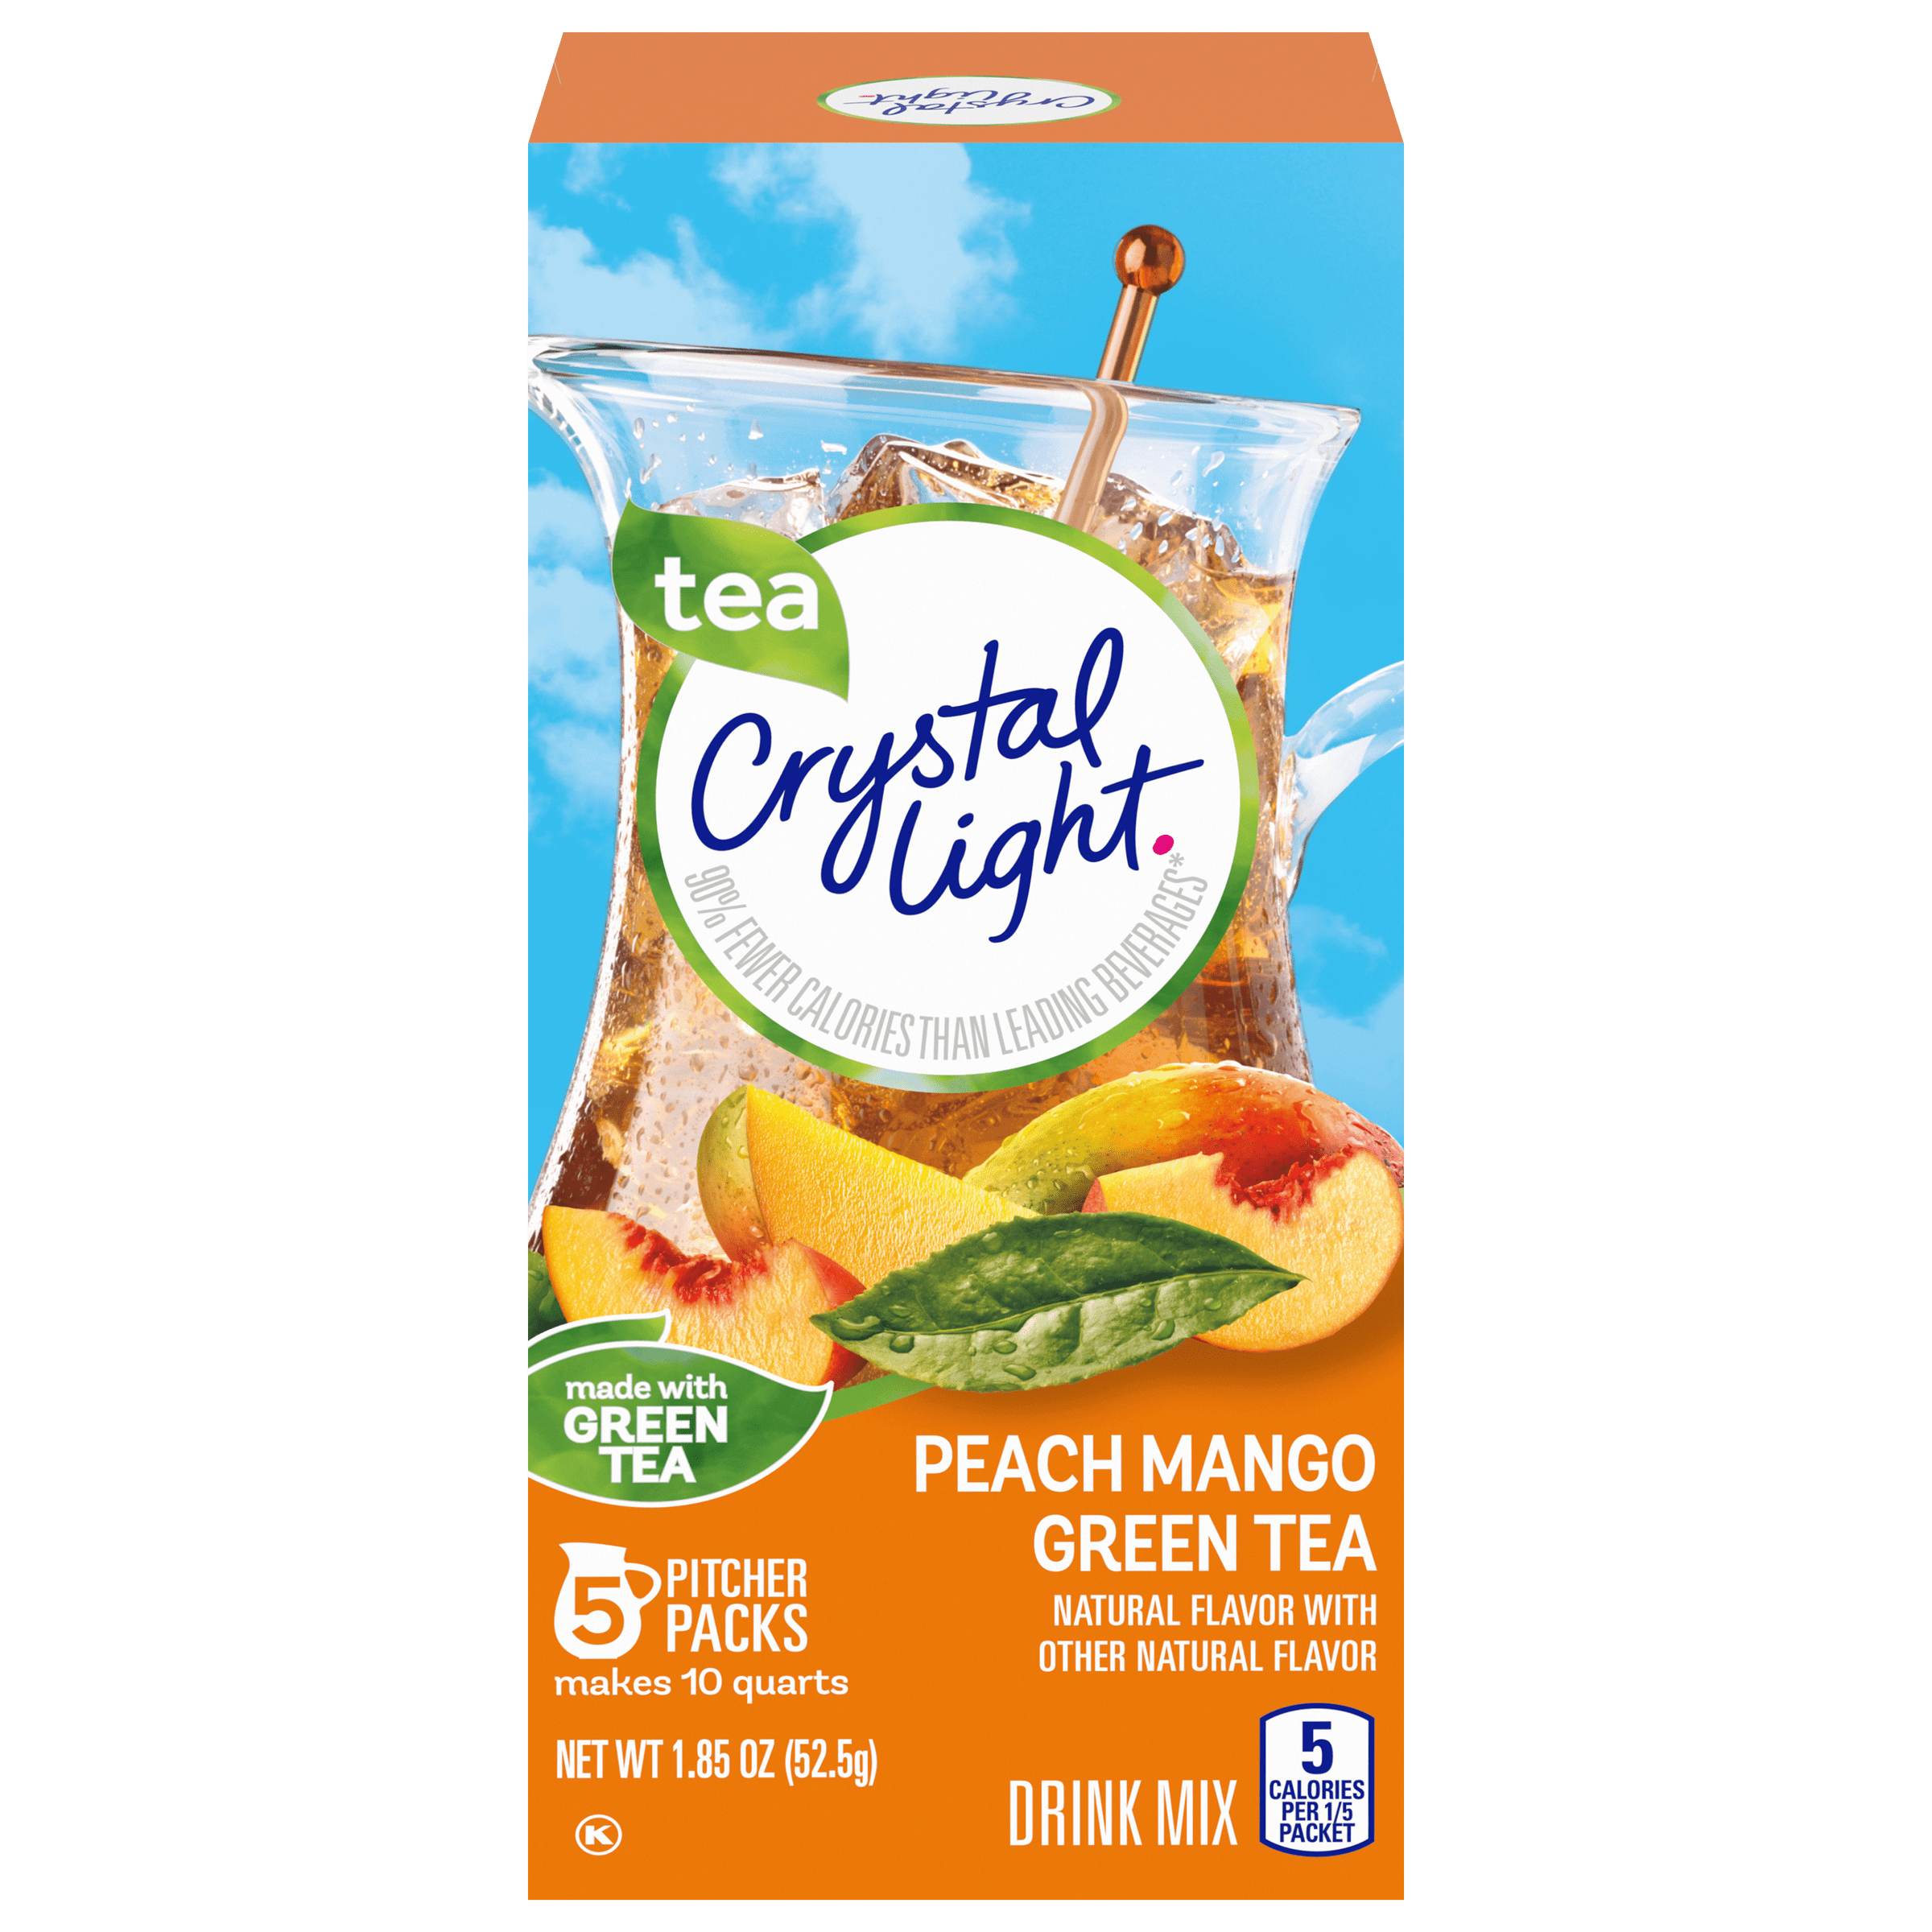 Peach Mango Green Tea Naturally Flavored Powdered Drink Mix